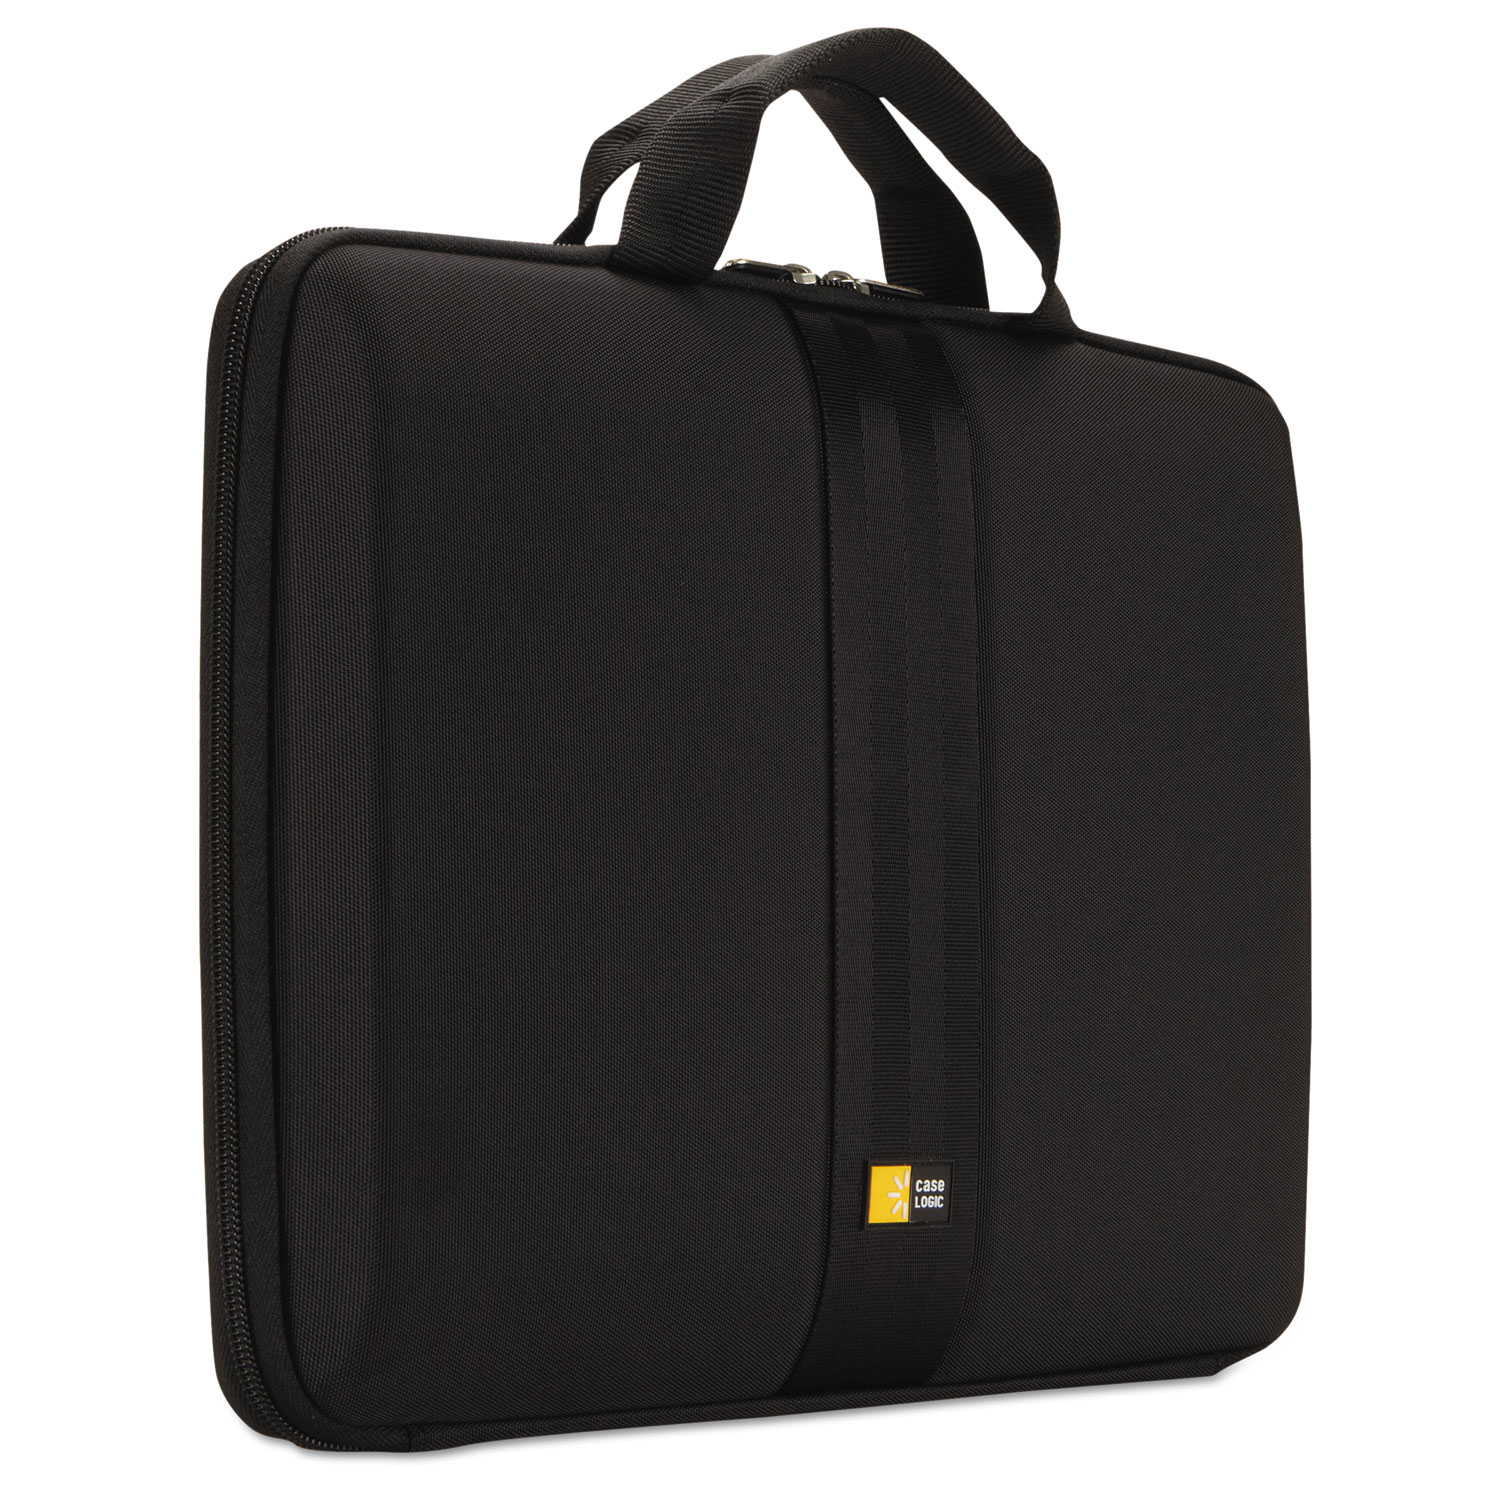  Case Logic 3201246 Laptop Sleeve for 13 Chromebook or Laptops, 14 1/4 x 1 7/8 x 11, Black (CLG3201246) 